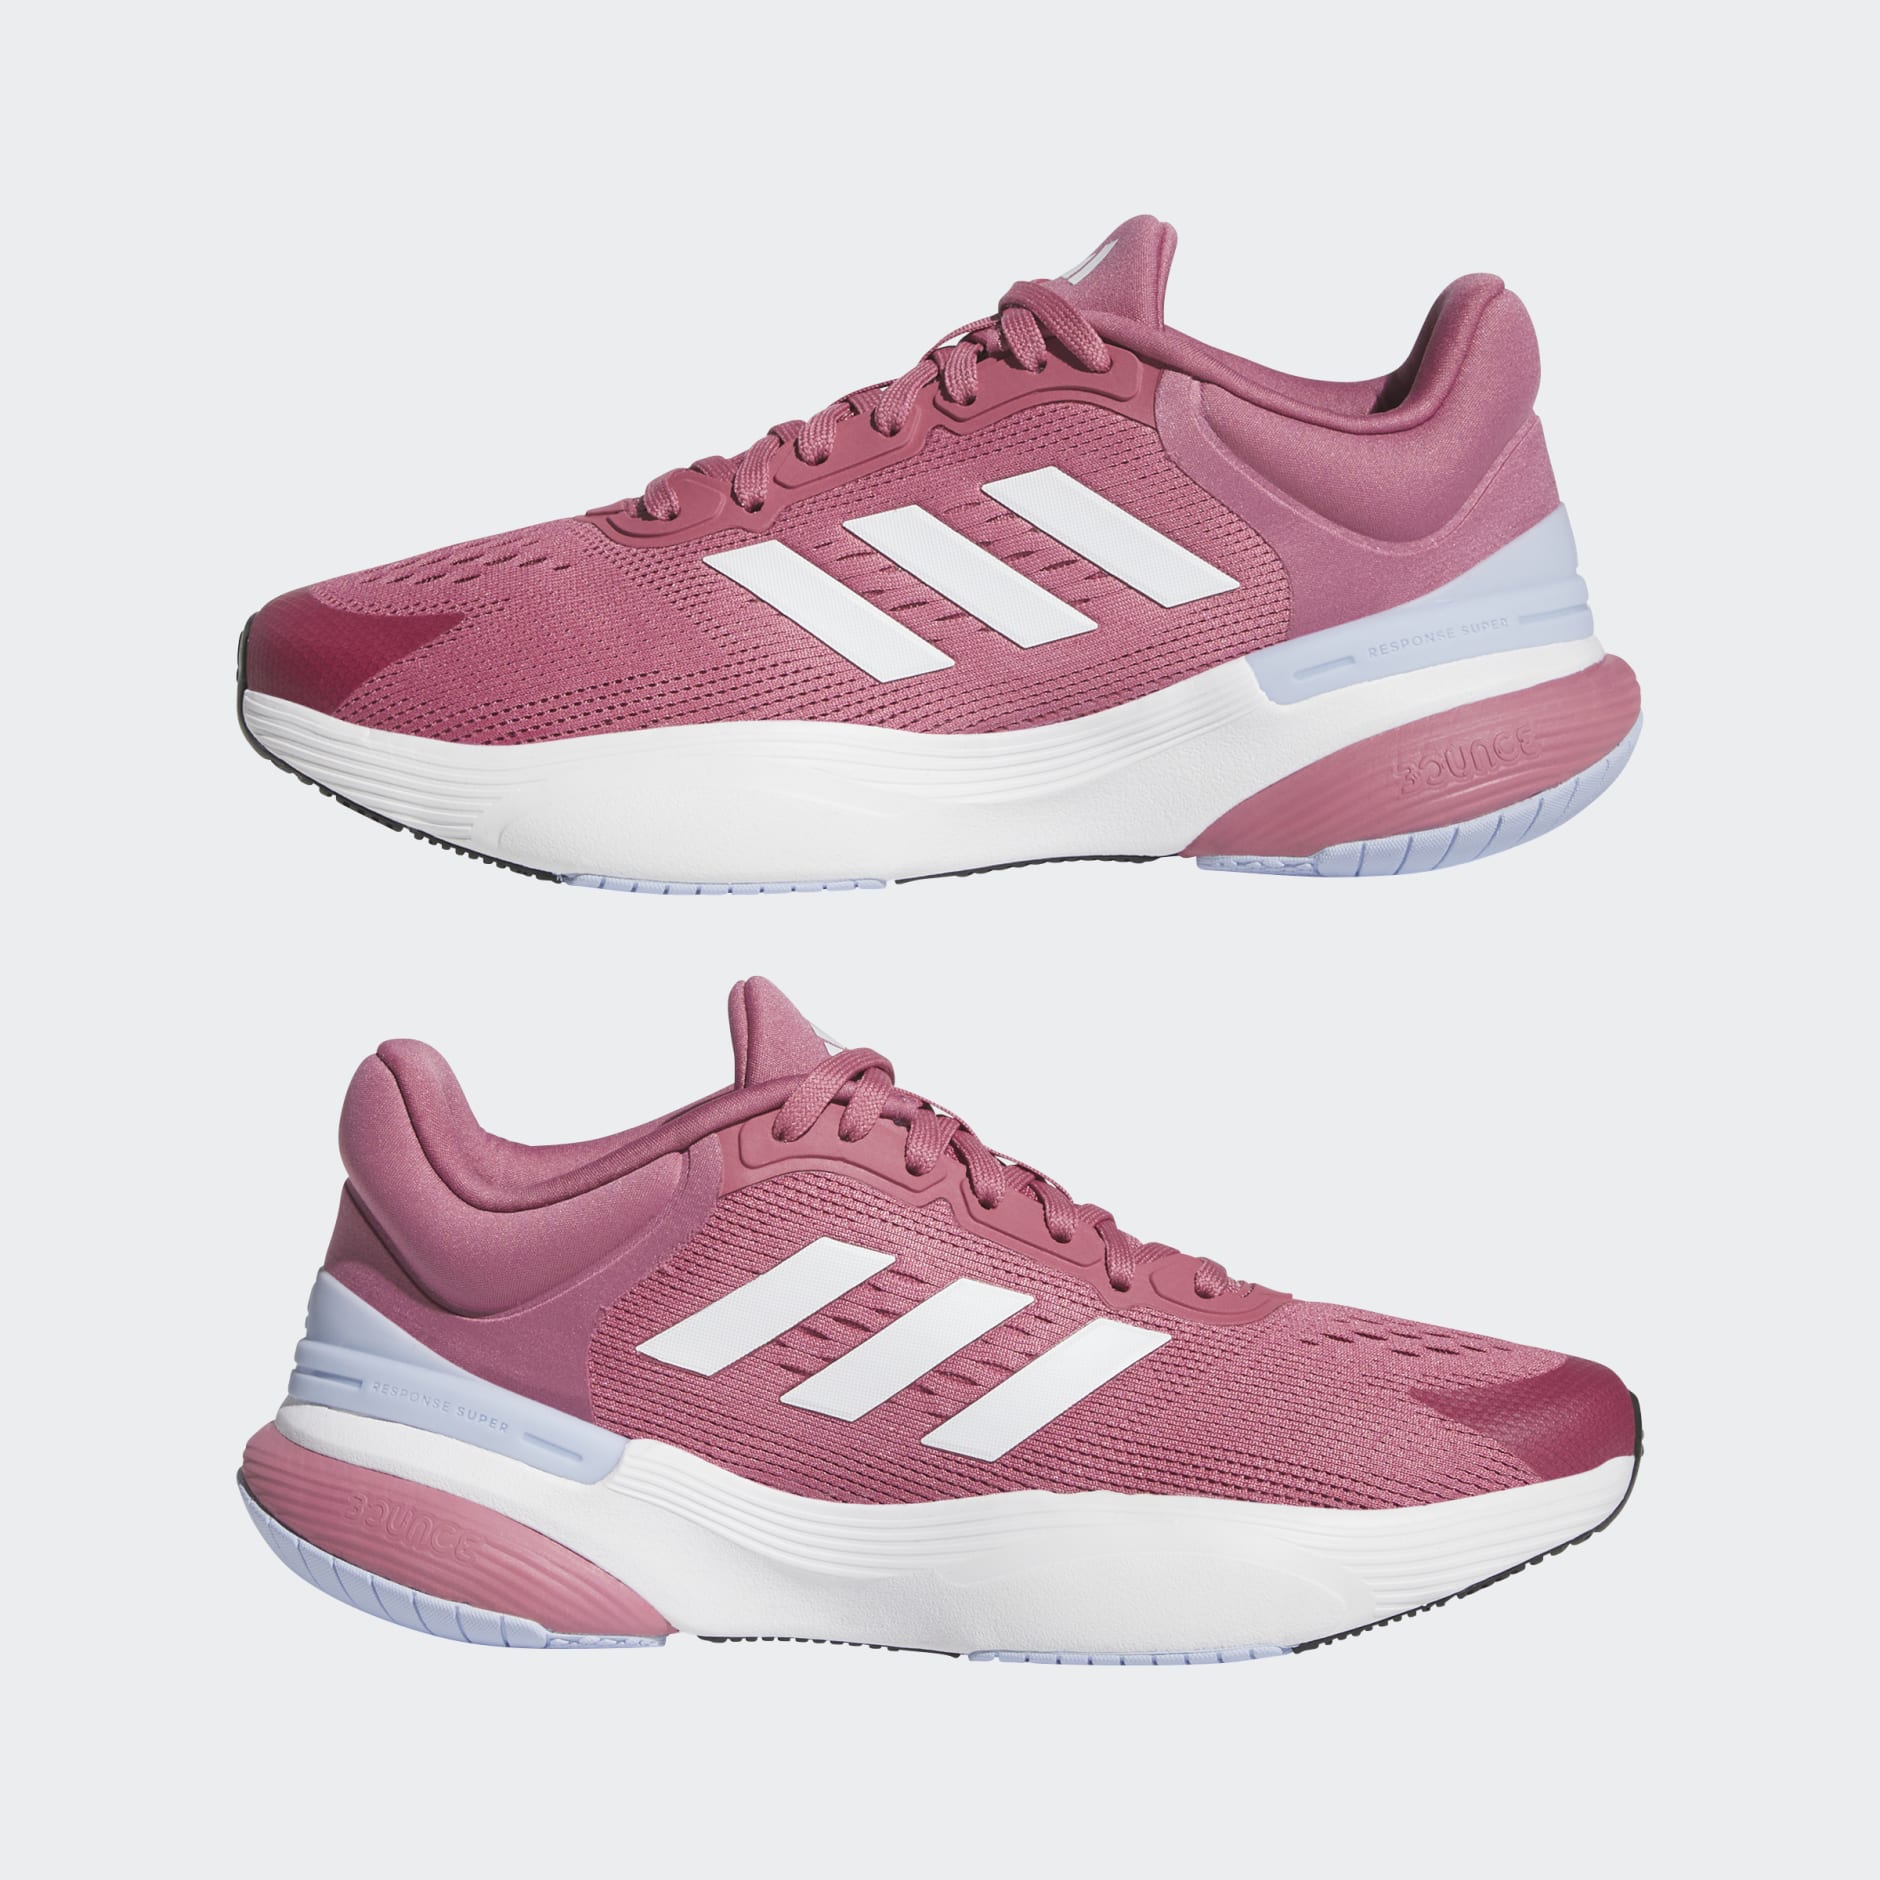 Women's Shoes - Response Super 3.0 Shoes - Pink | Oman